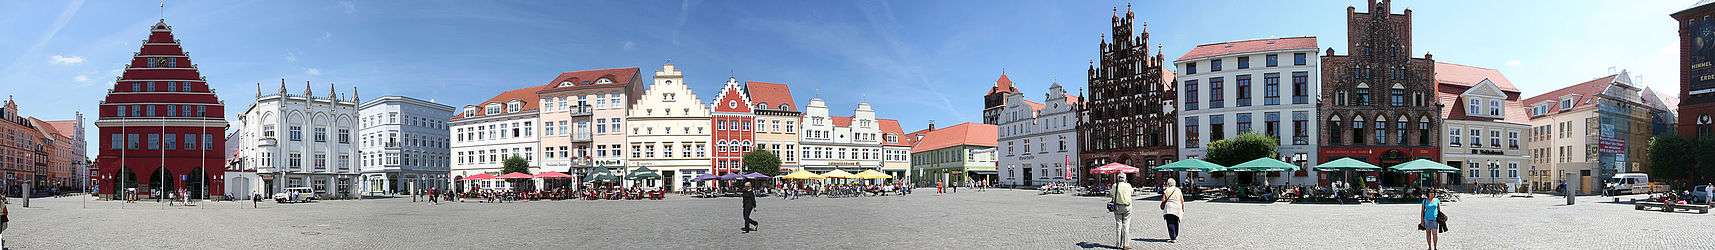 The central market square (Marktplatz)